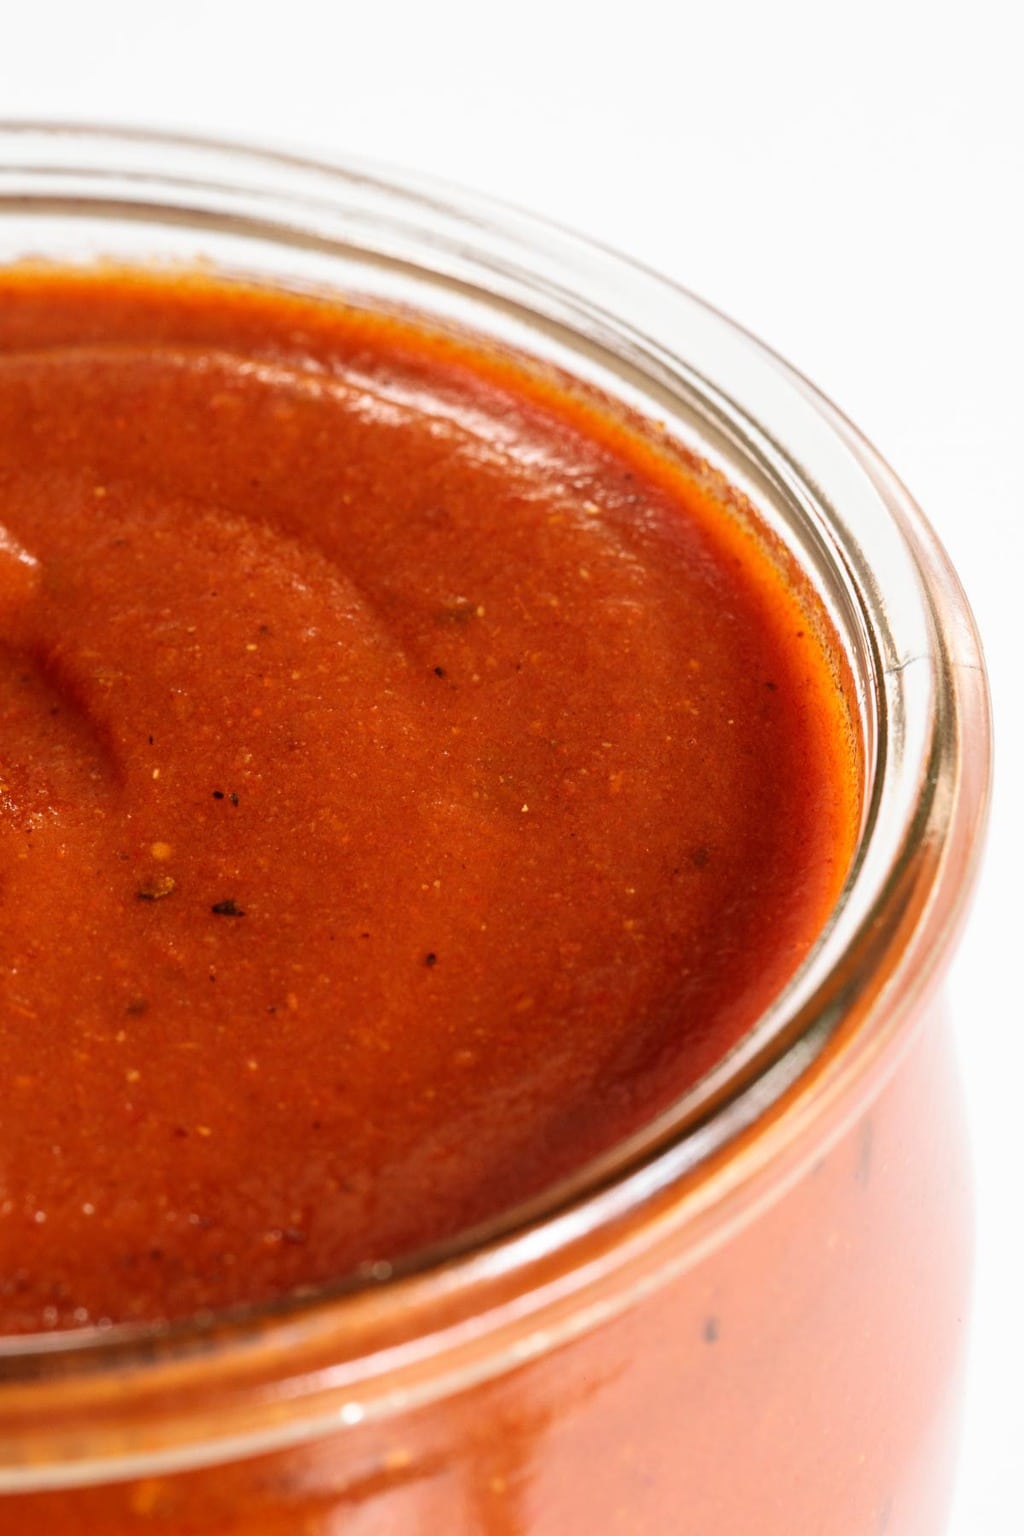 Extreme closeup photo of a glass jar of 10-Minute Homemade Enchilada Sauce.